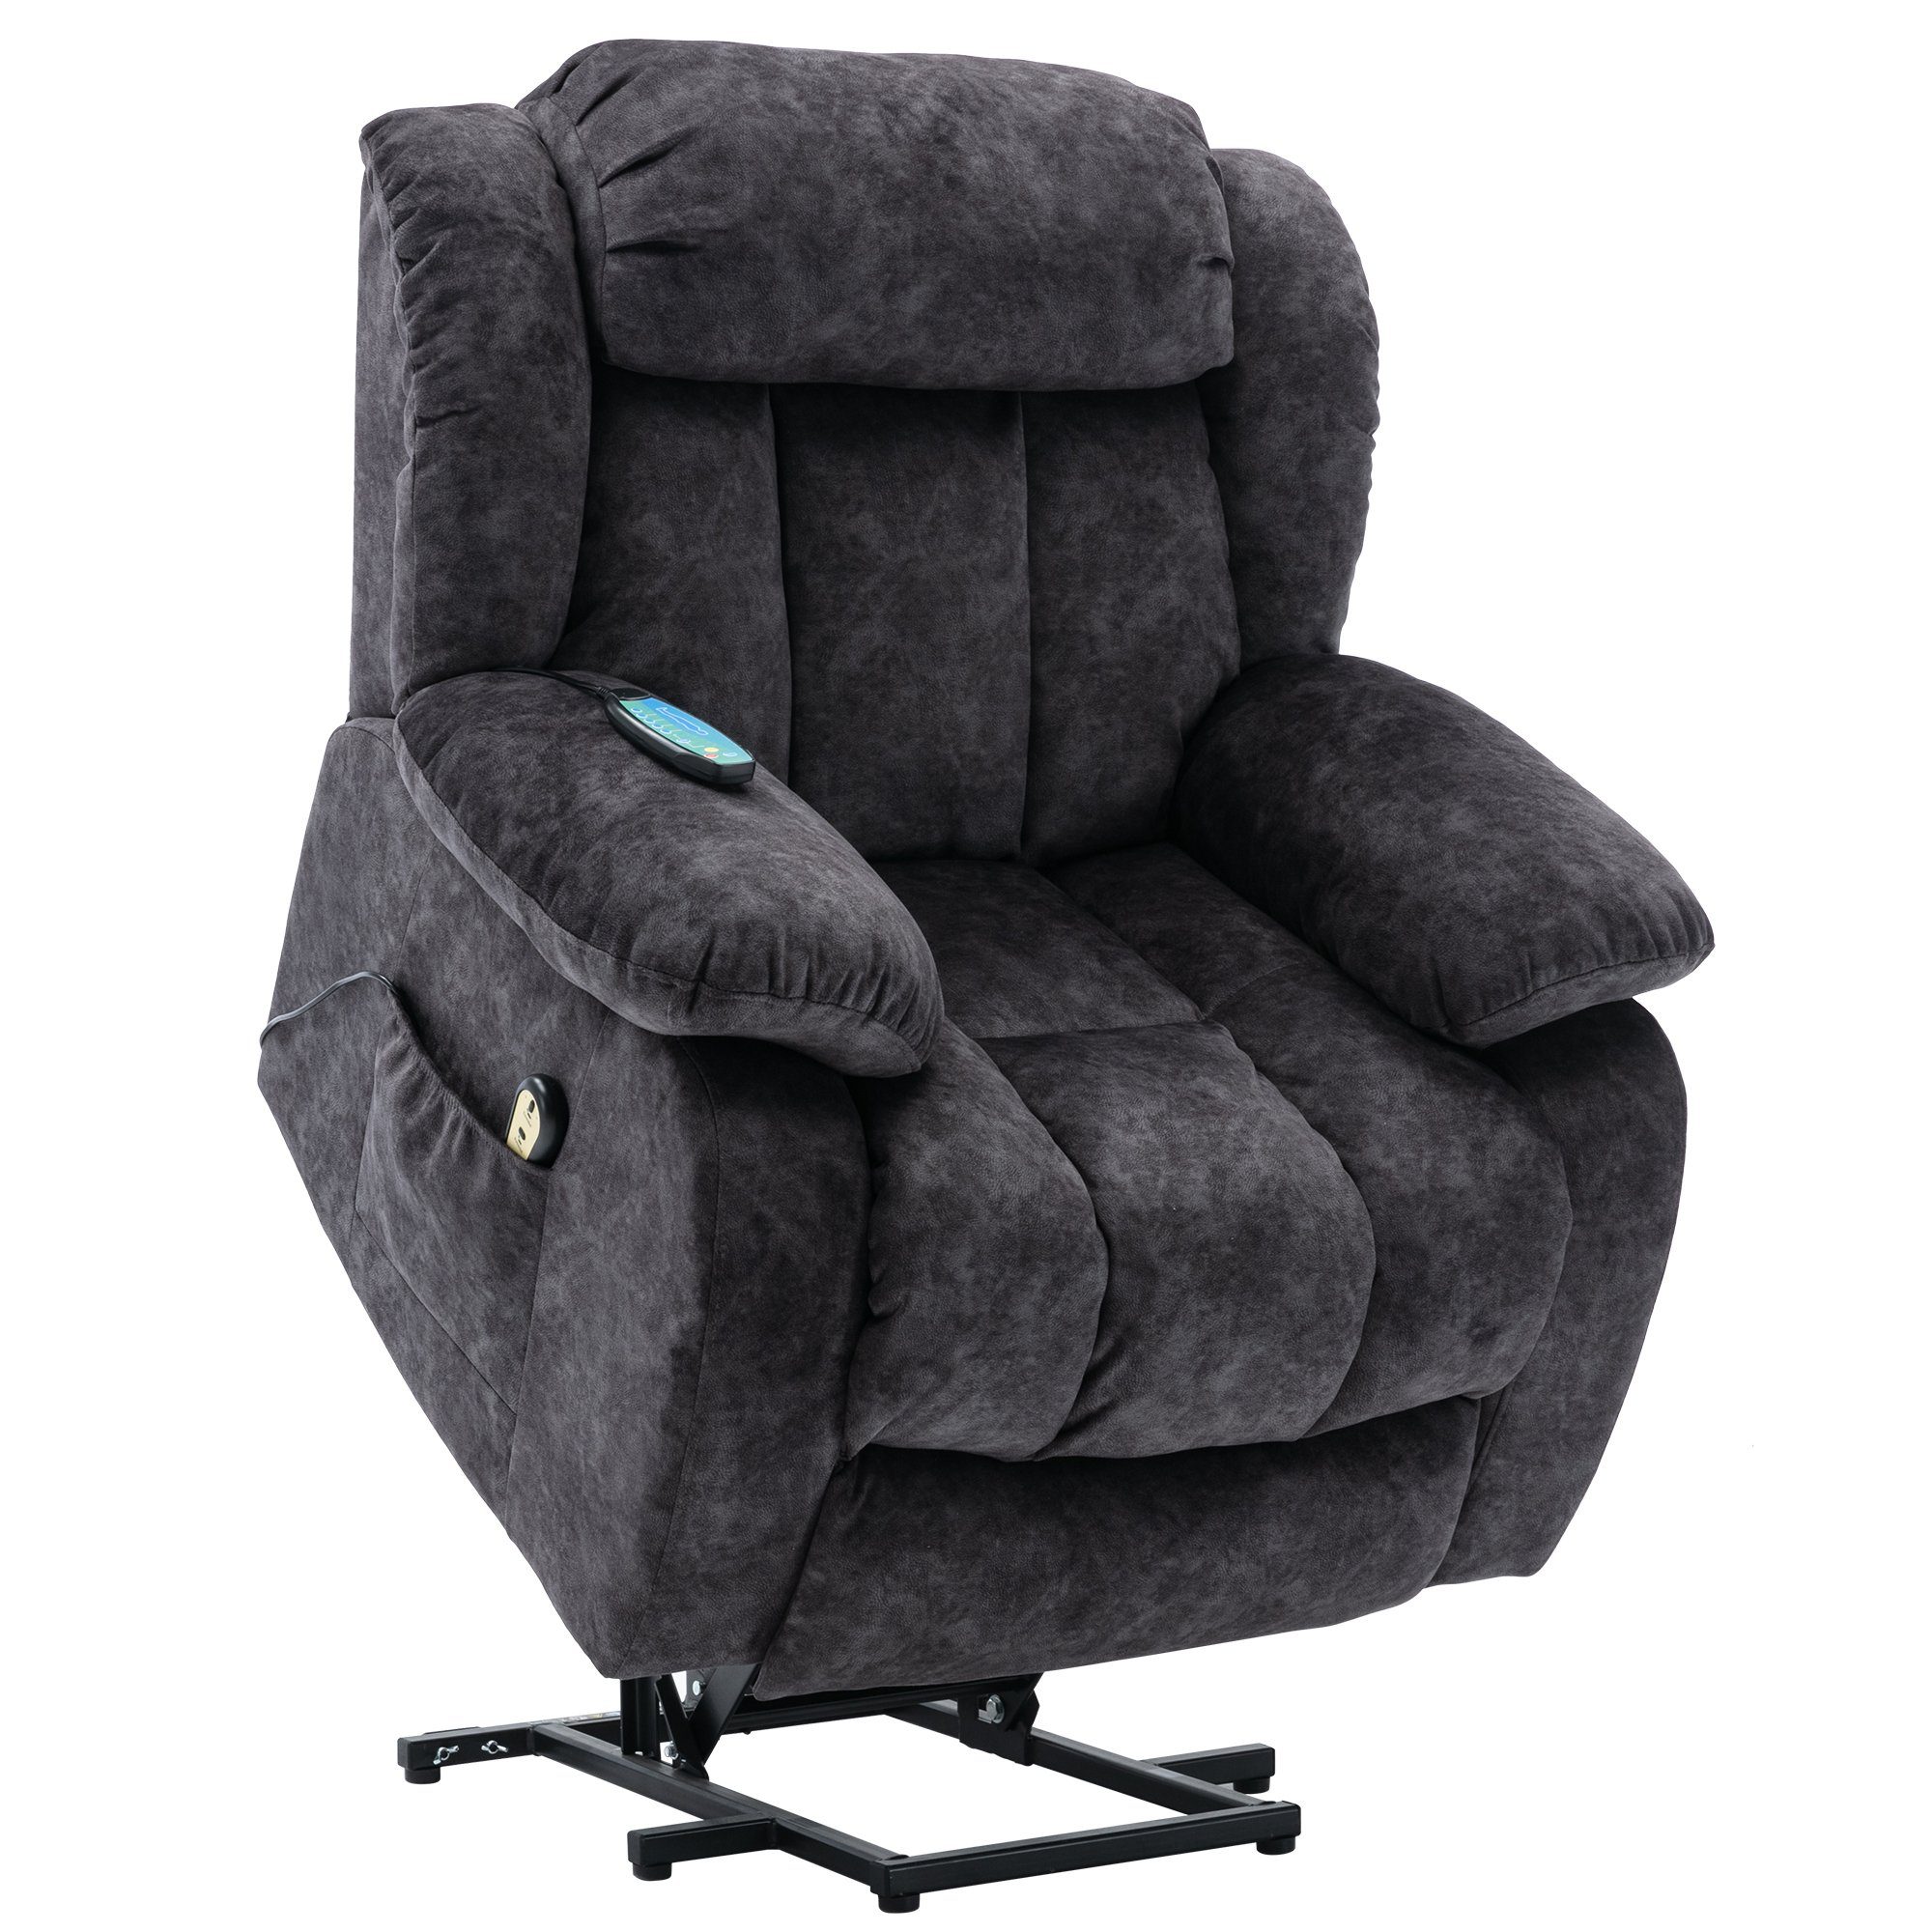 Merax TV-Sessel, Massagesesel mit Wärme und Vibration, USB-verstellbar, beheizt Grau